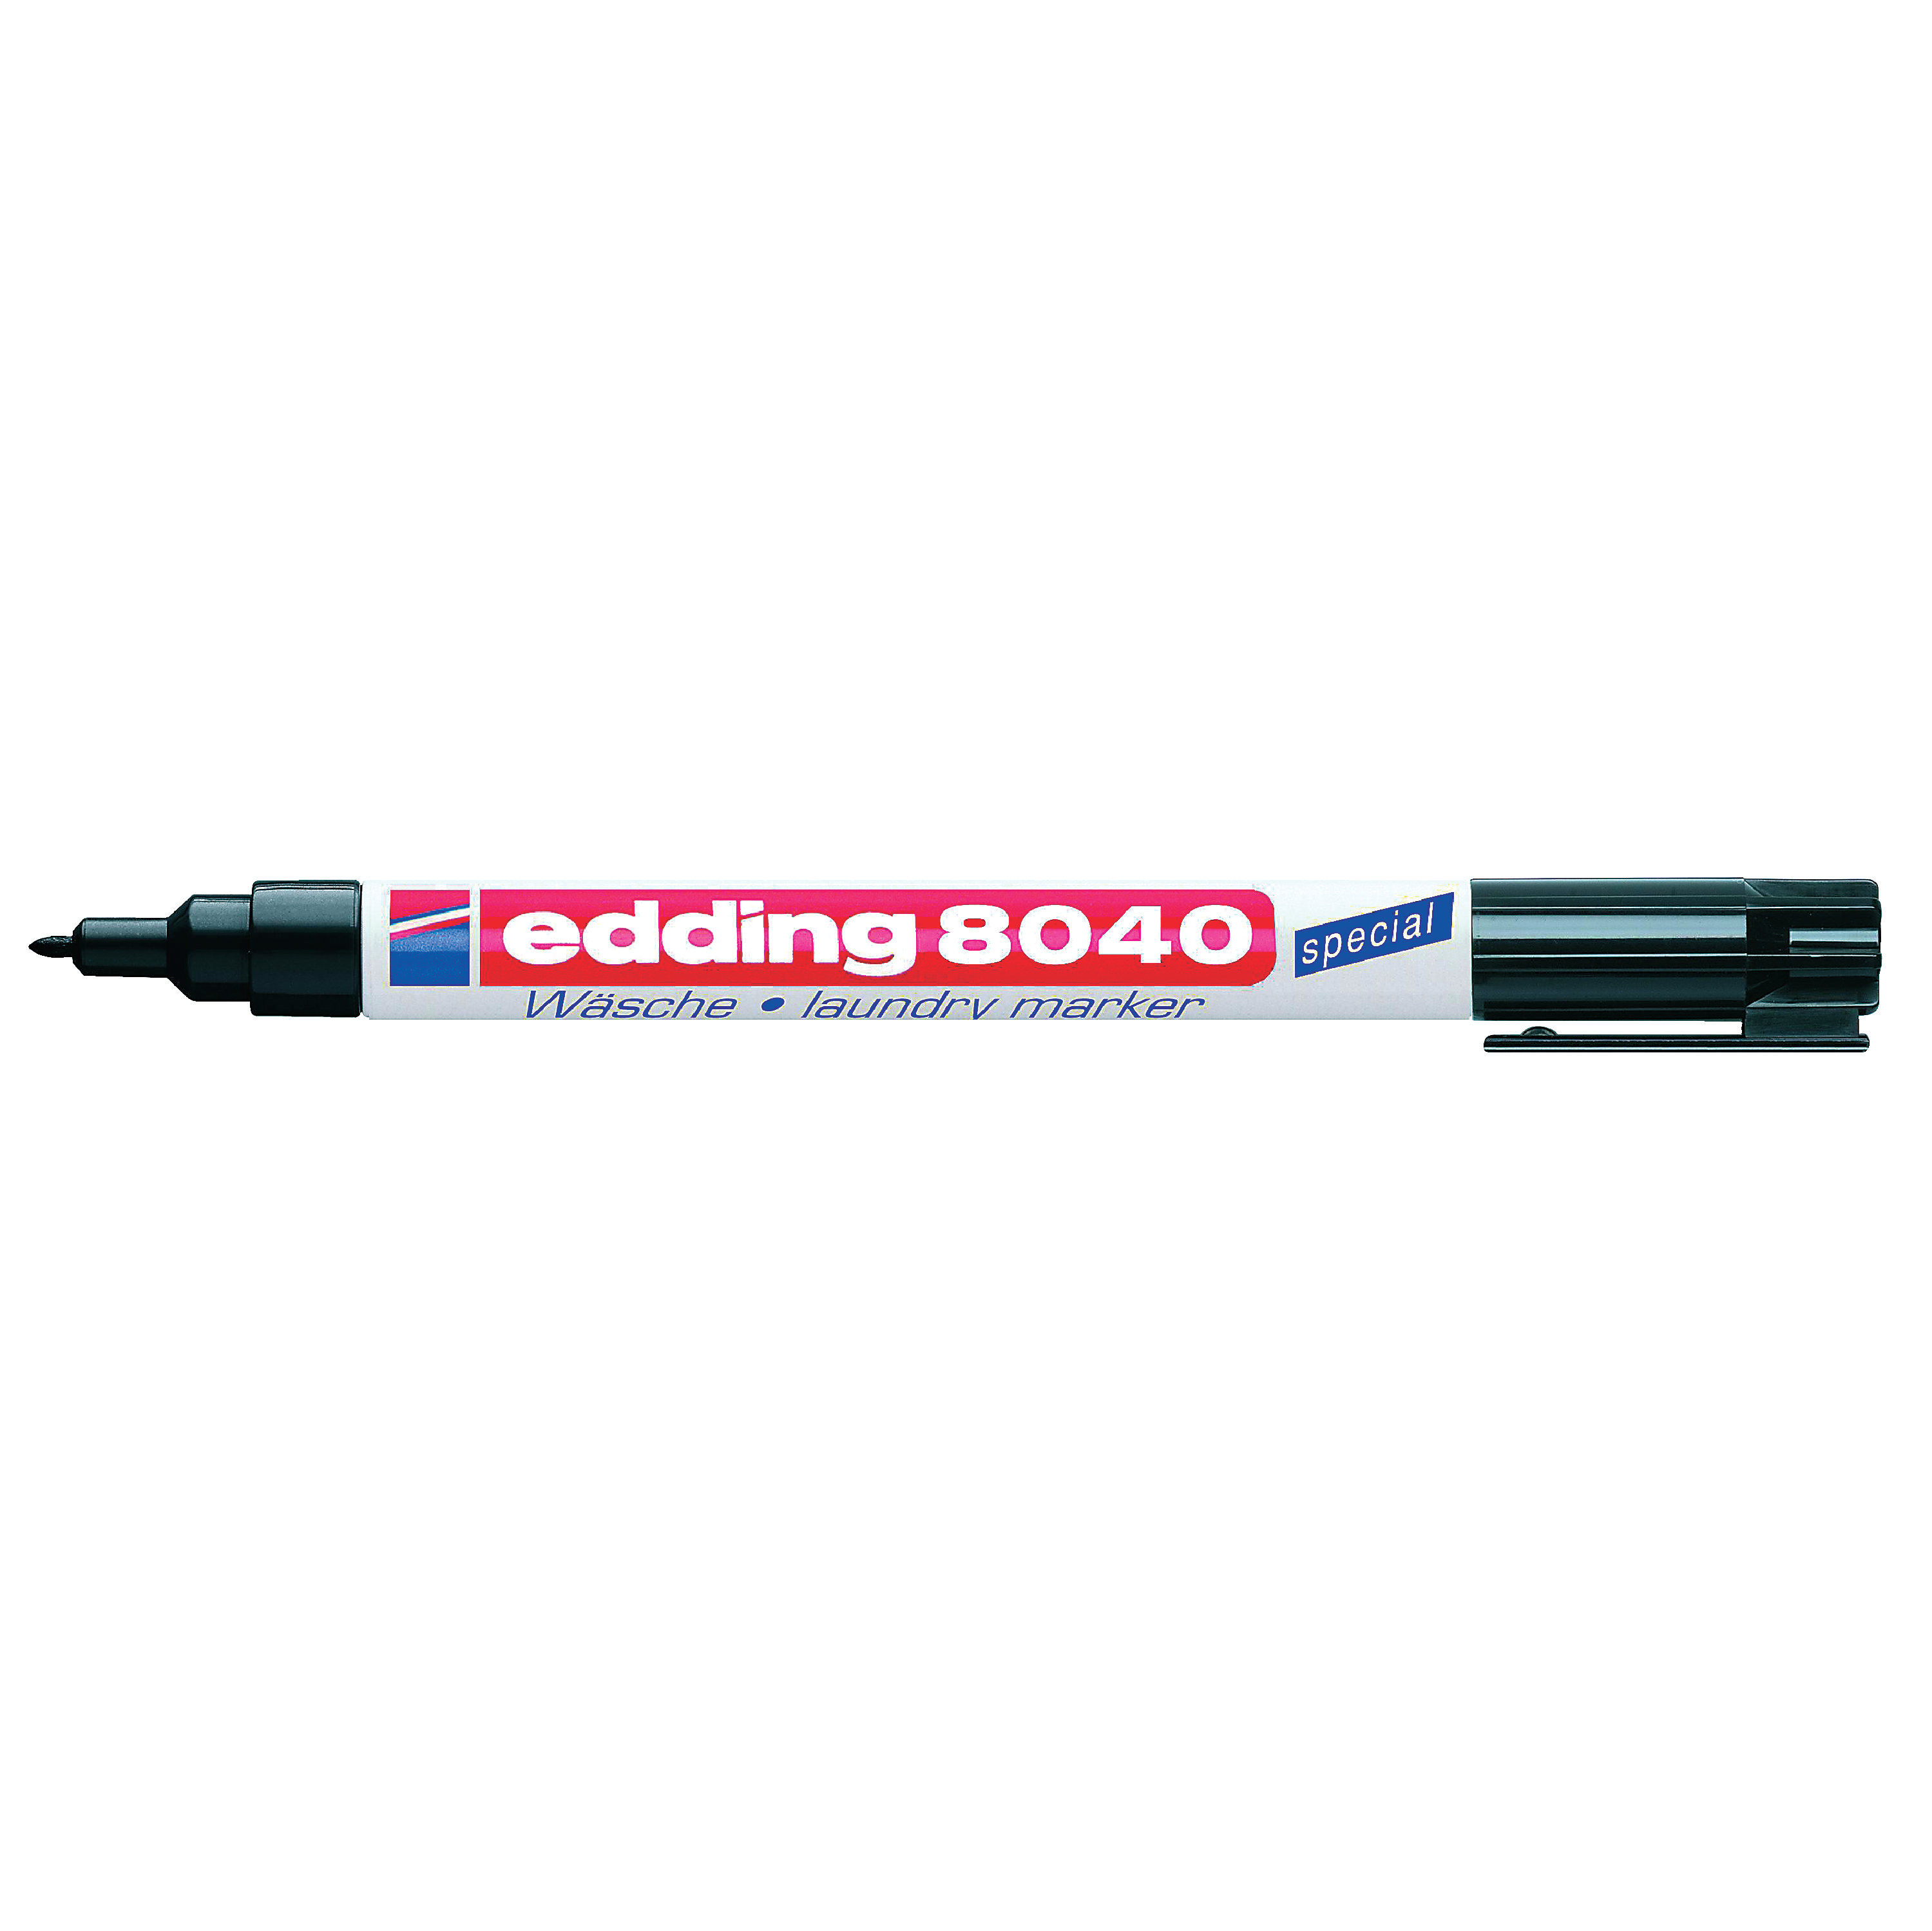 edding 8040 Laundry marker - VBS Hobby